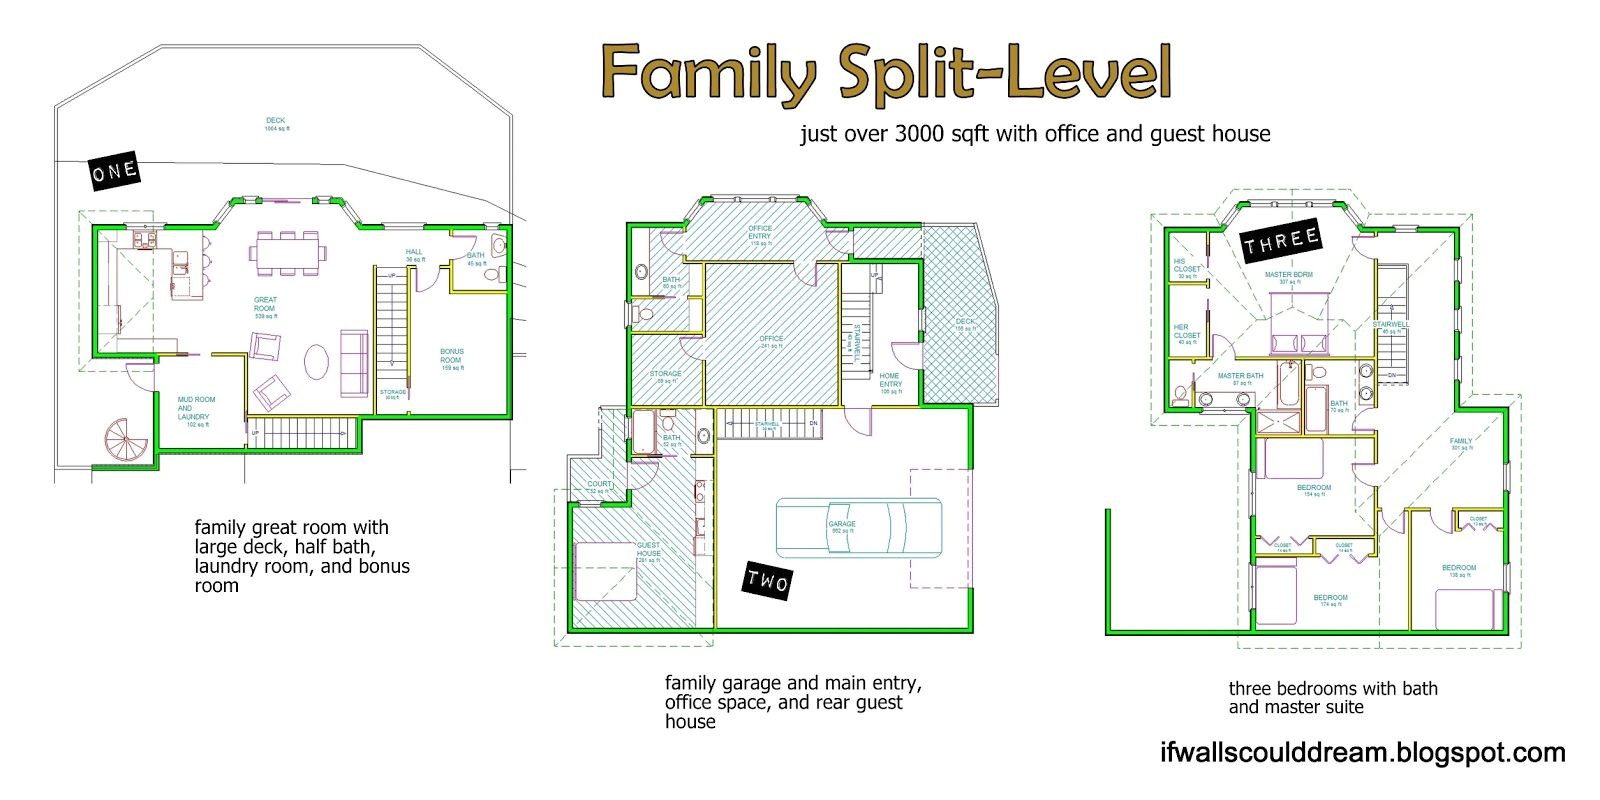 Three Level Split House Plans 3 Level Split House Plans 2018 House Plans